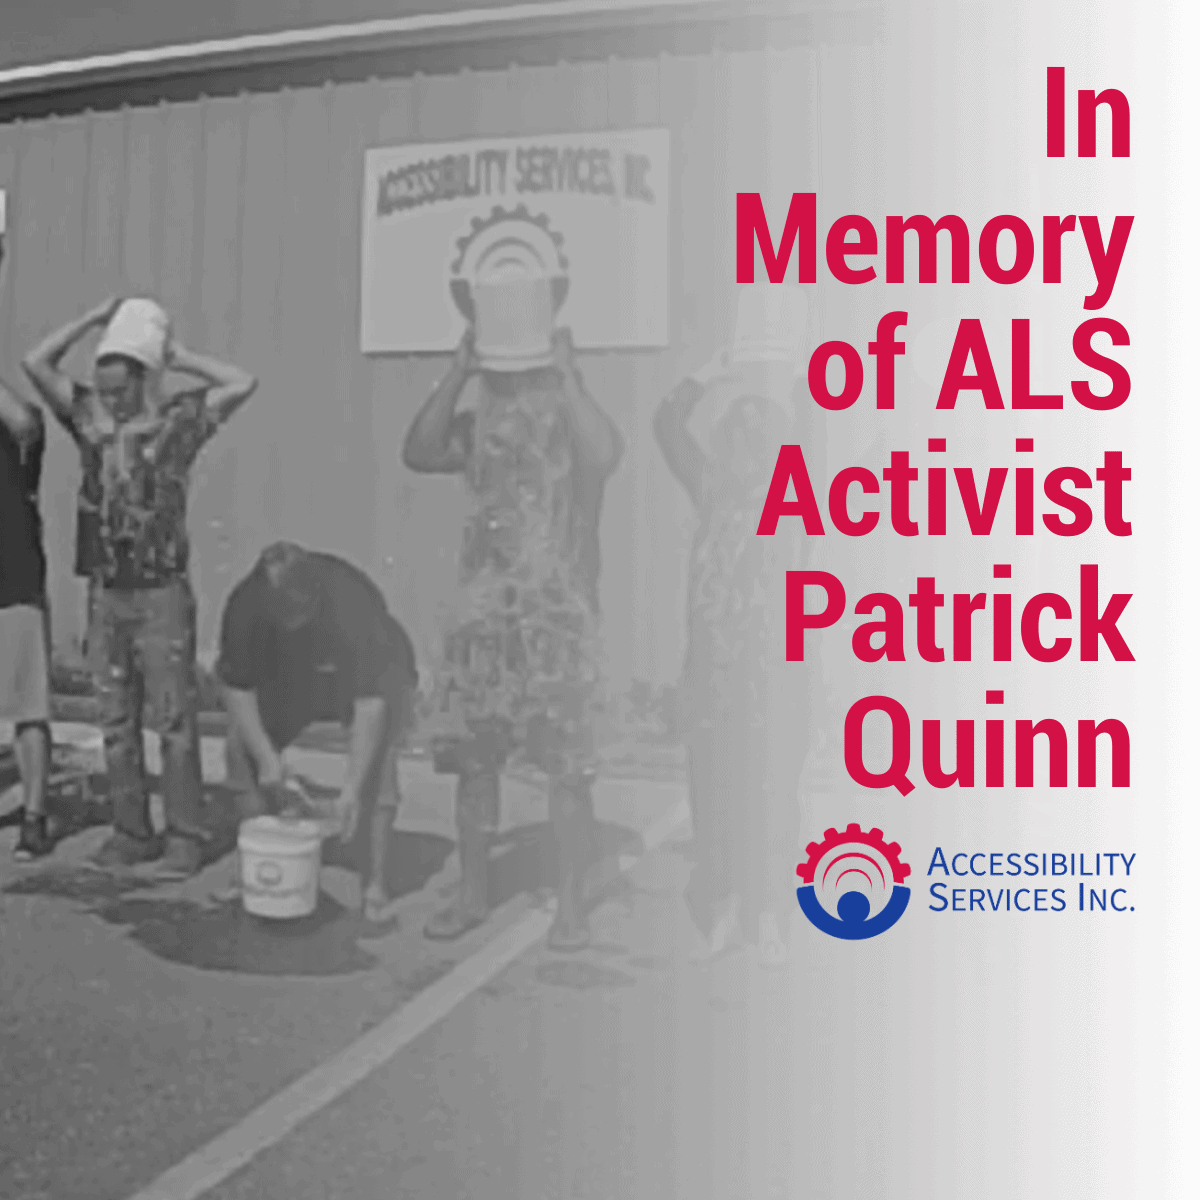 In Memory of ALS Activist Patrick Quinn